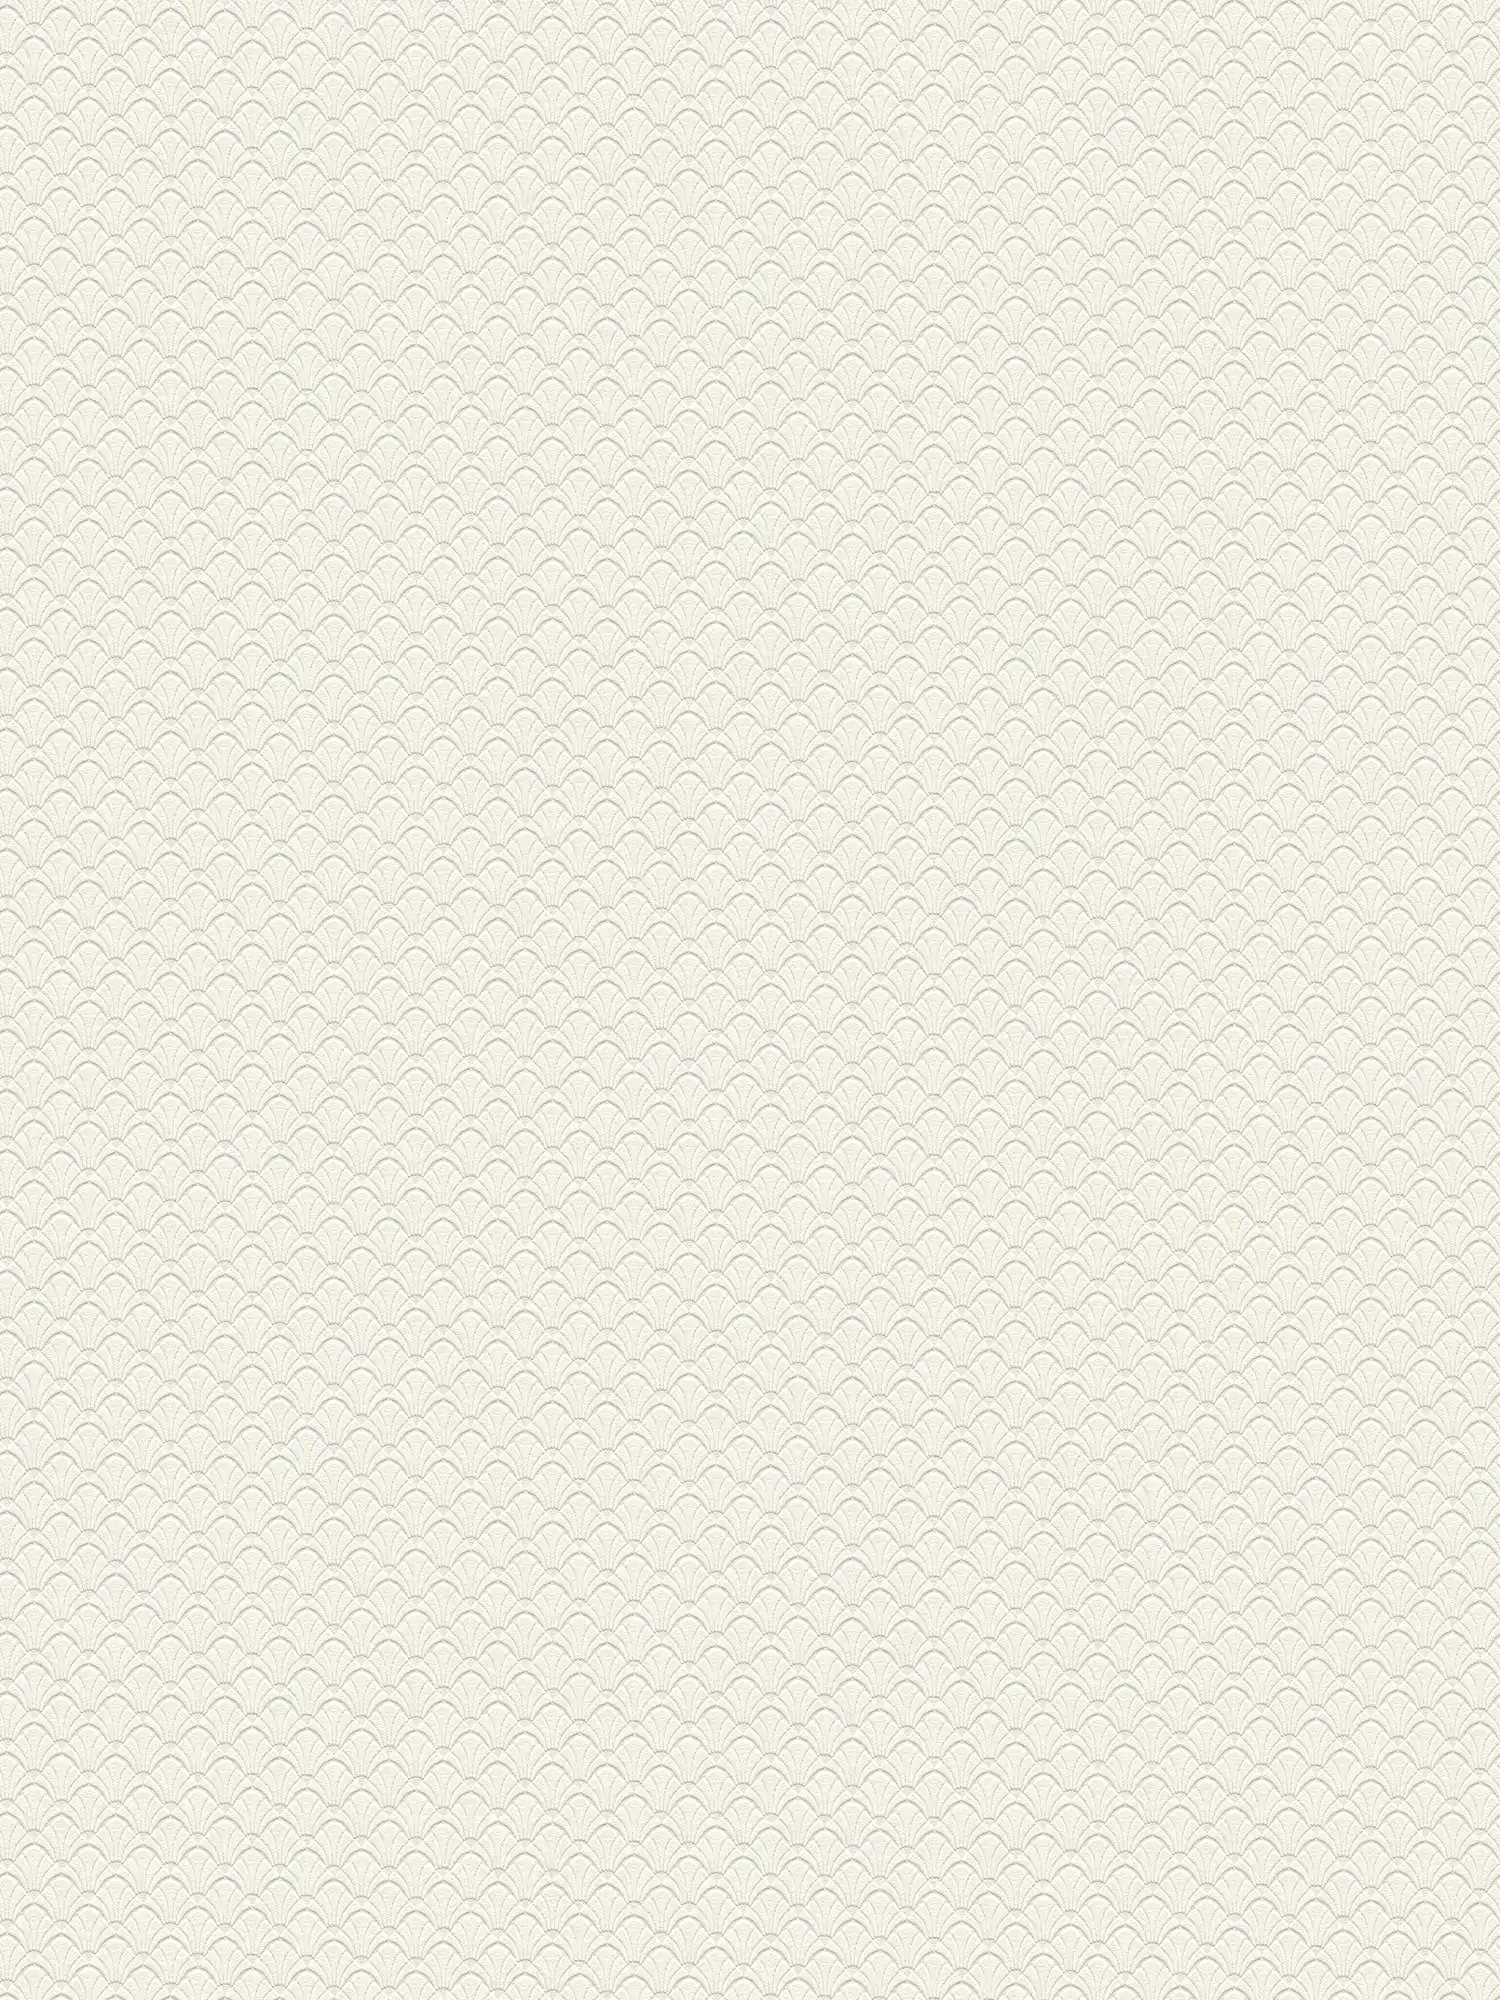 Wallpaper filigree structure pattern in shell design - cream, white
